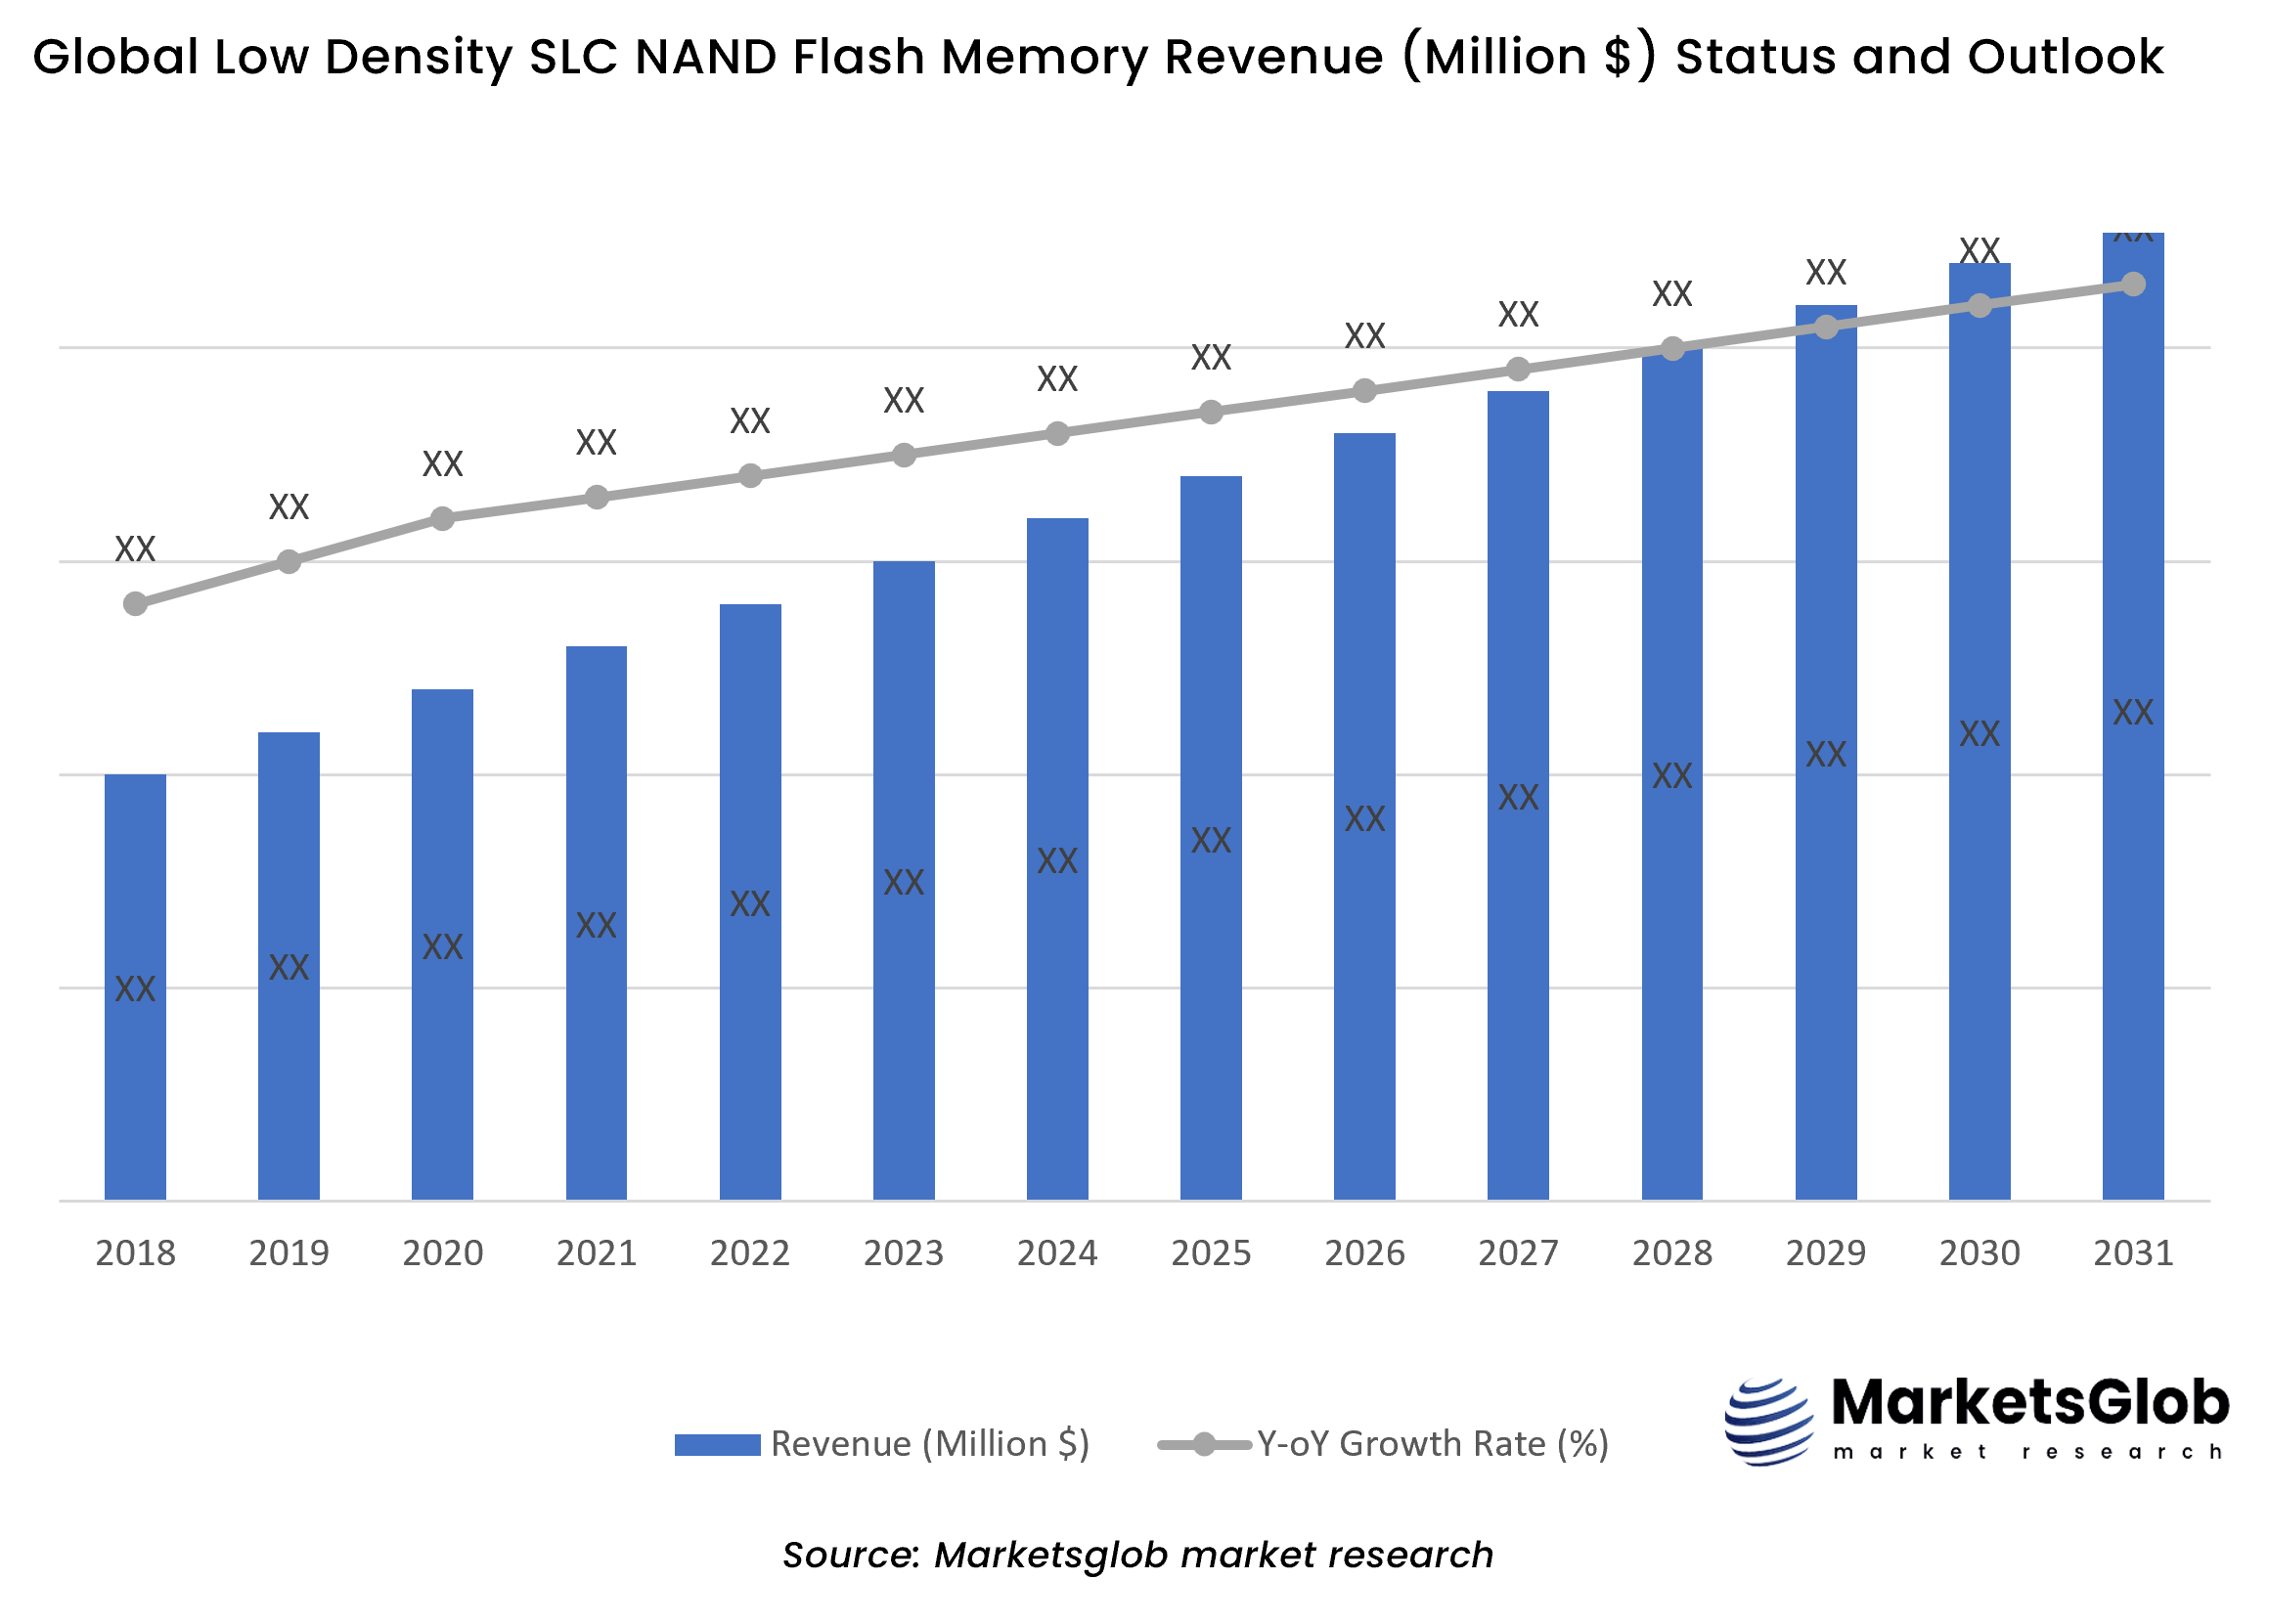 Low Density SLC NAND Flash Memory Status & Outlook